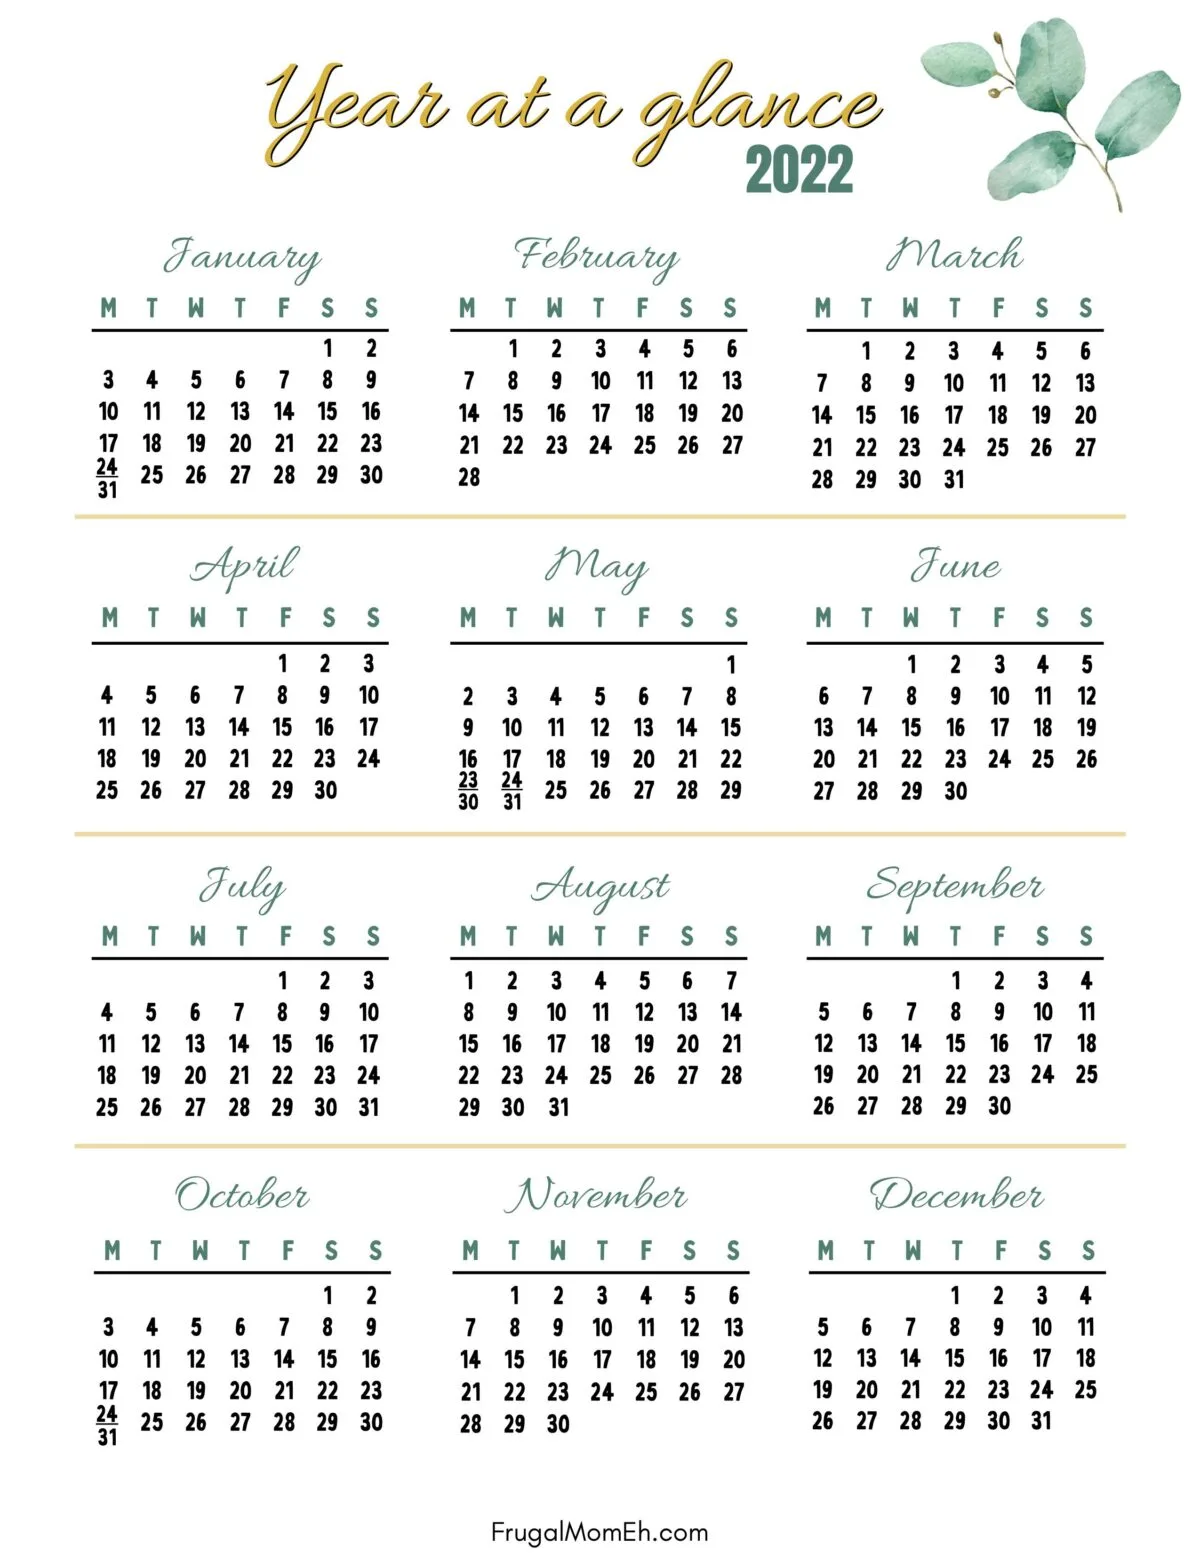 Year at a Glance (2022) Calendar